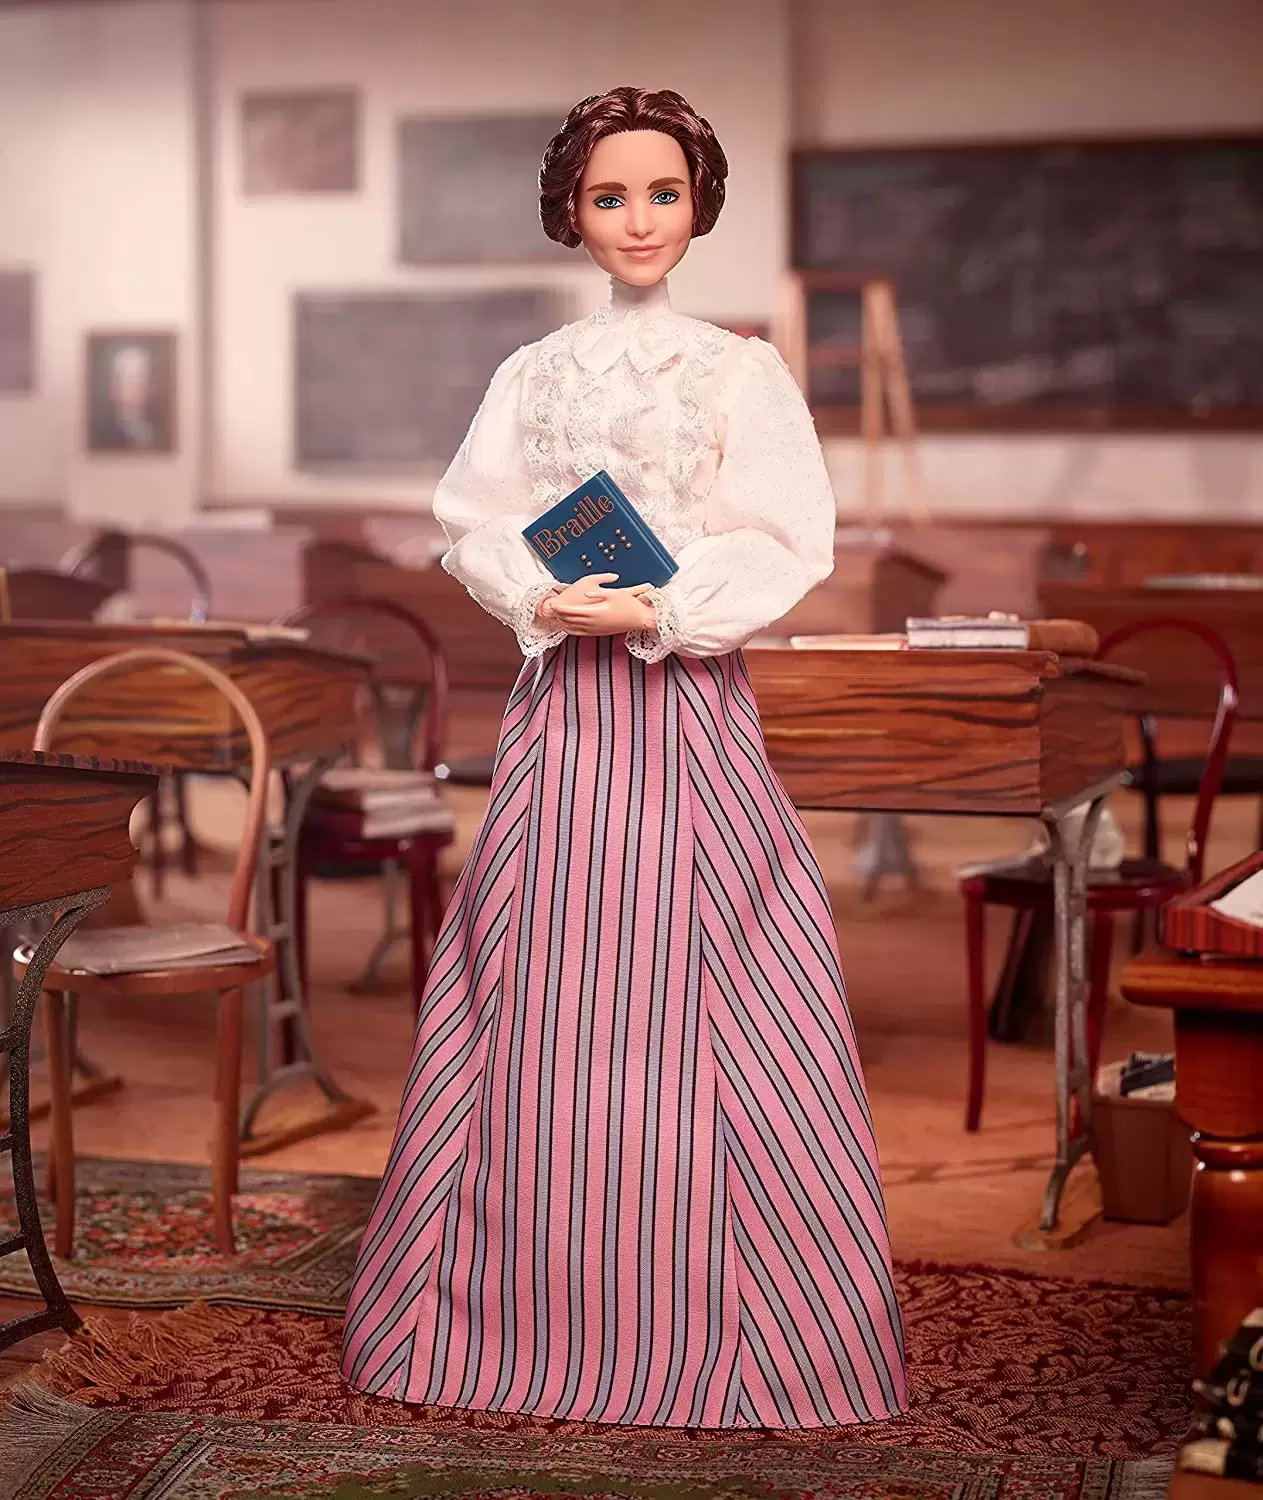 Barbie Inspiring Women Series - Helen Keller